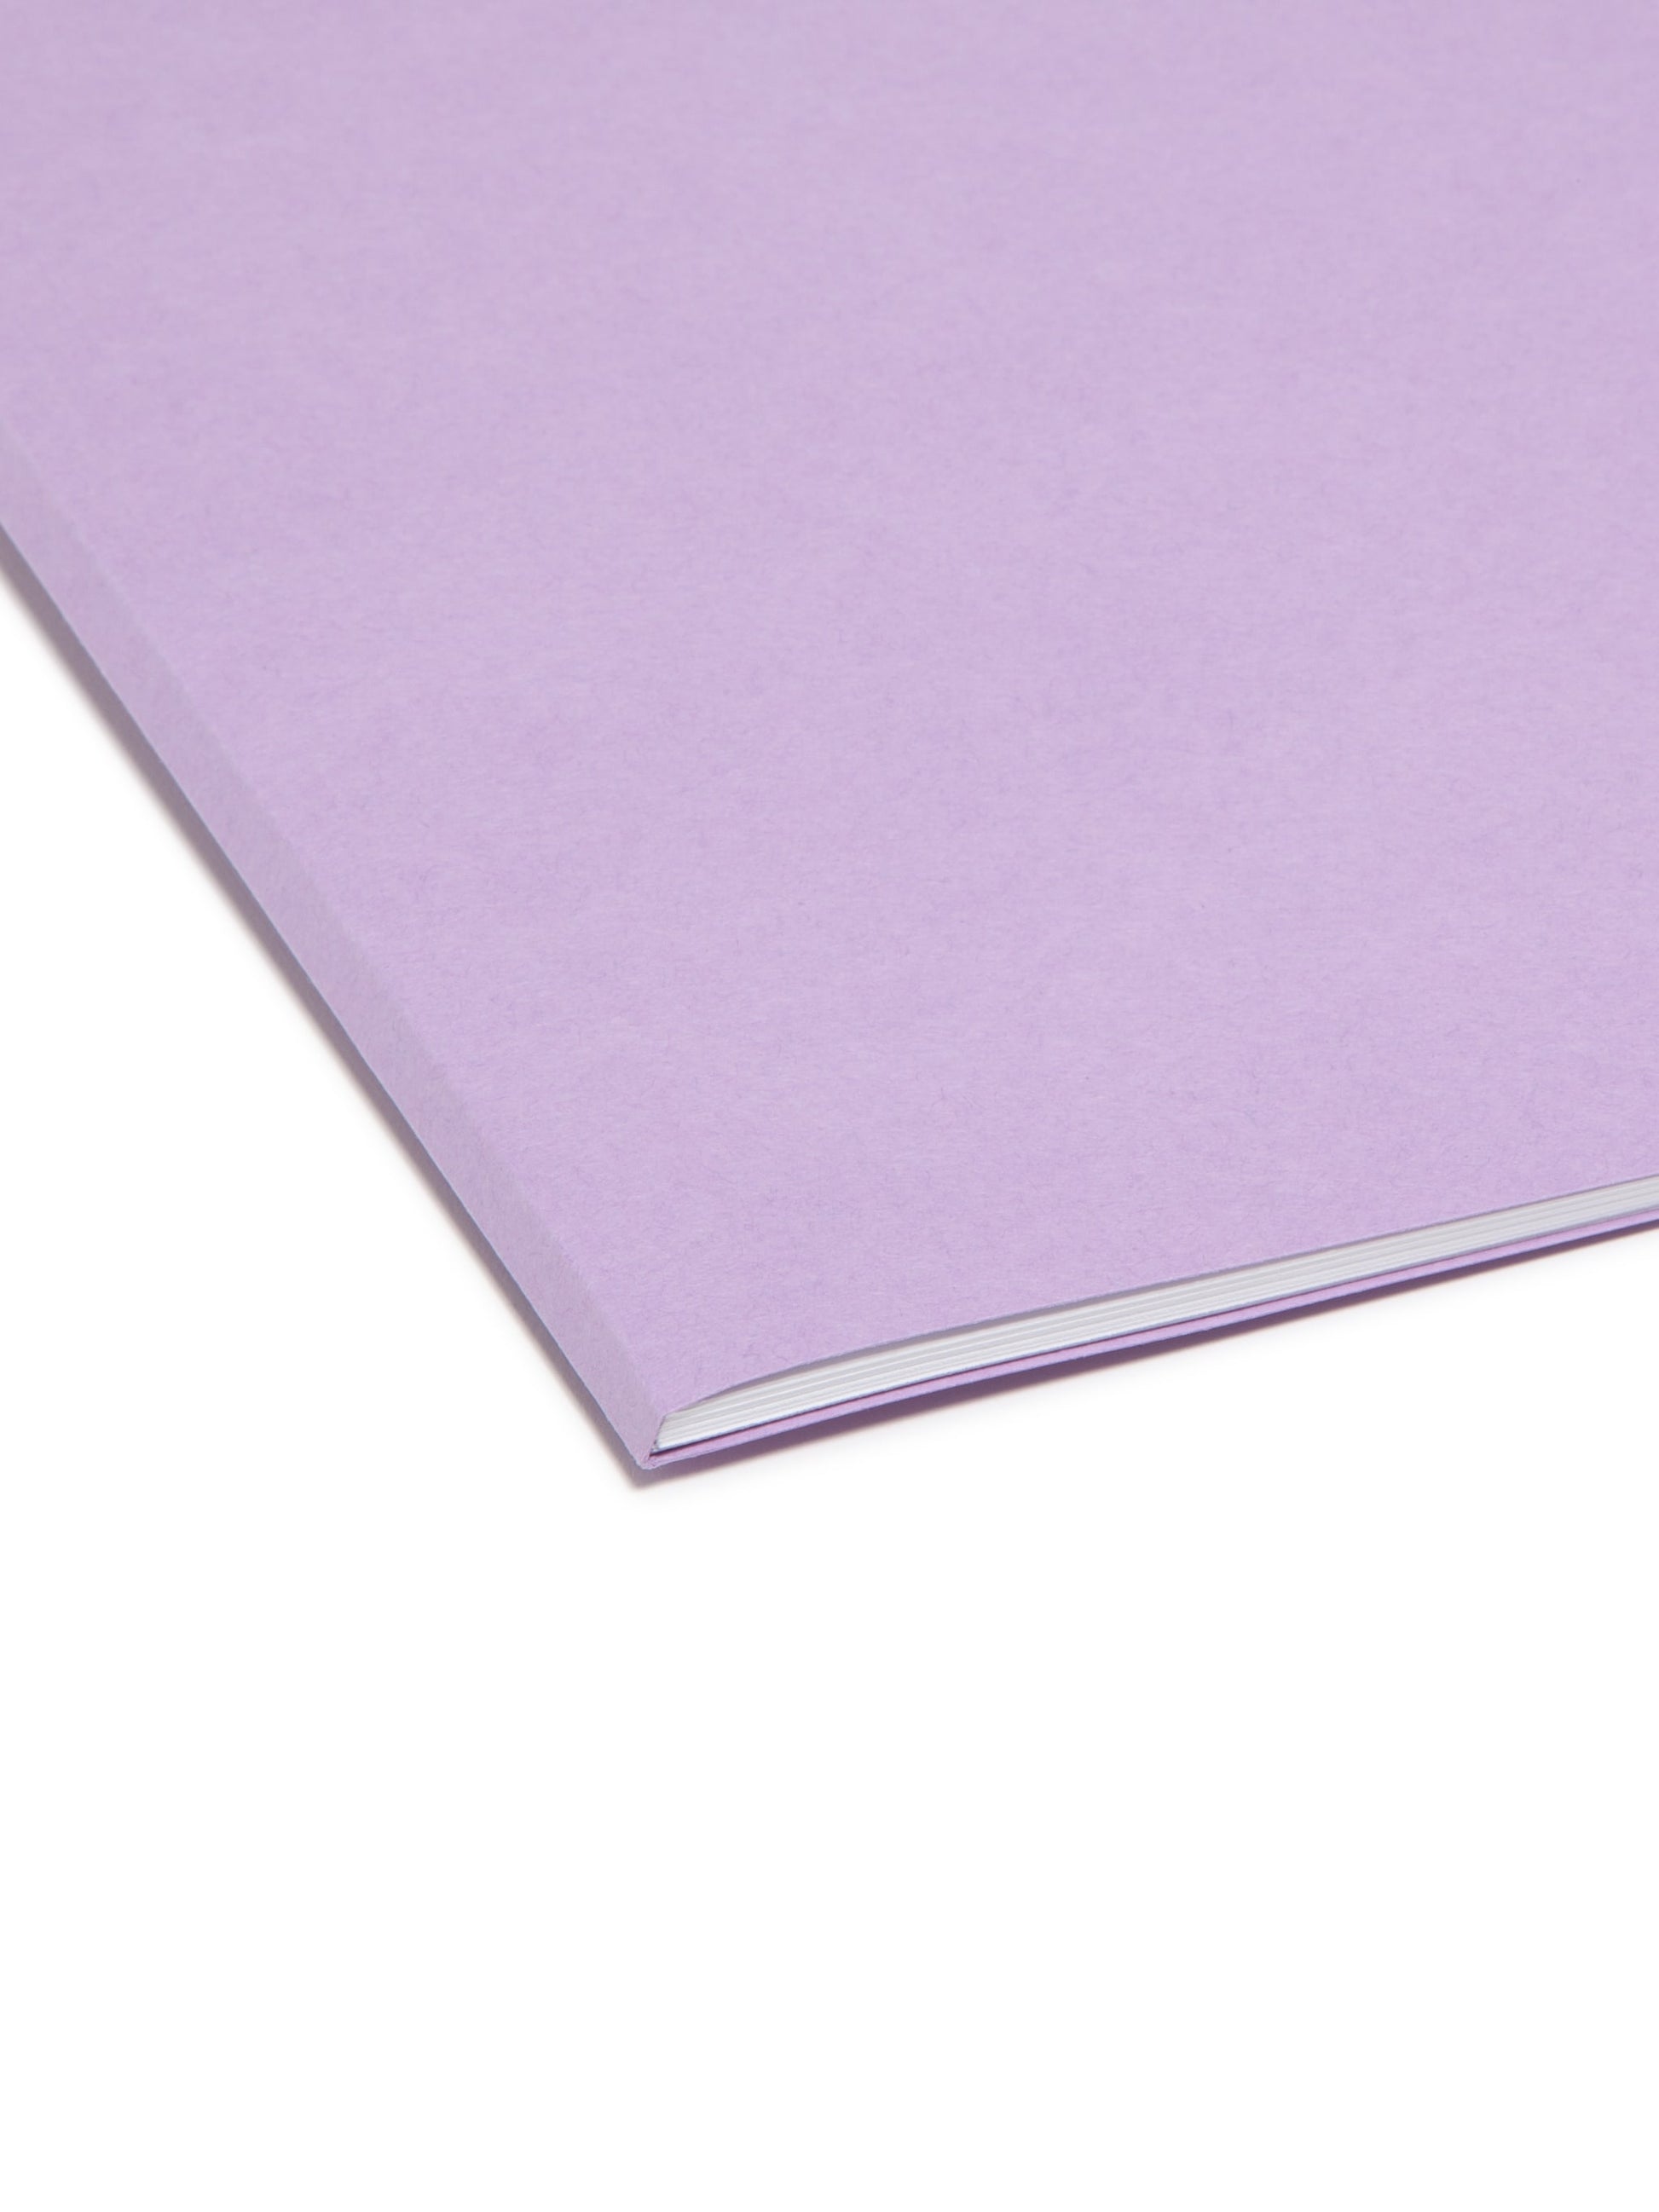 SuperTab® File Folders, 1/3-Cut Tab, Assorted Colors Color, Legal Size, Set of 100, 086486119627